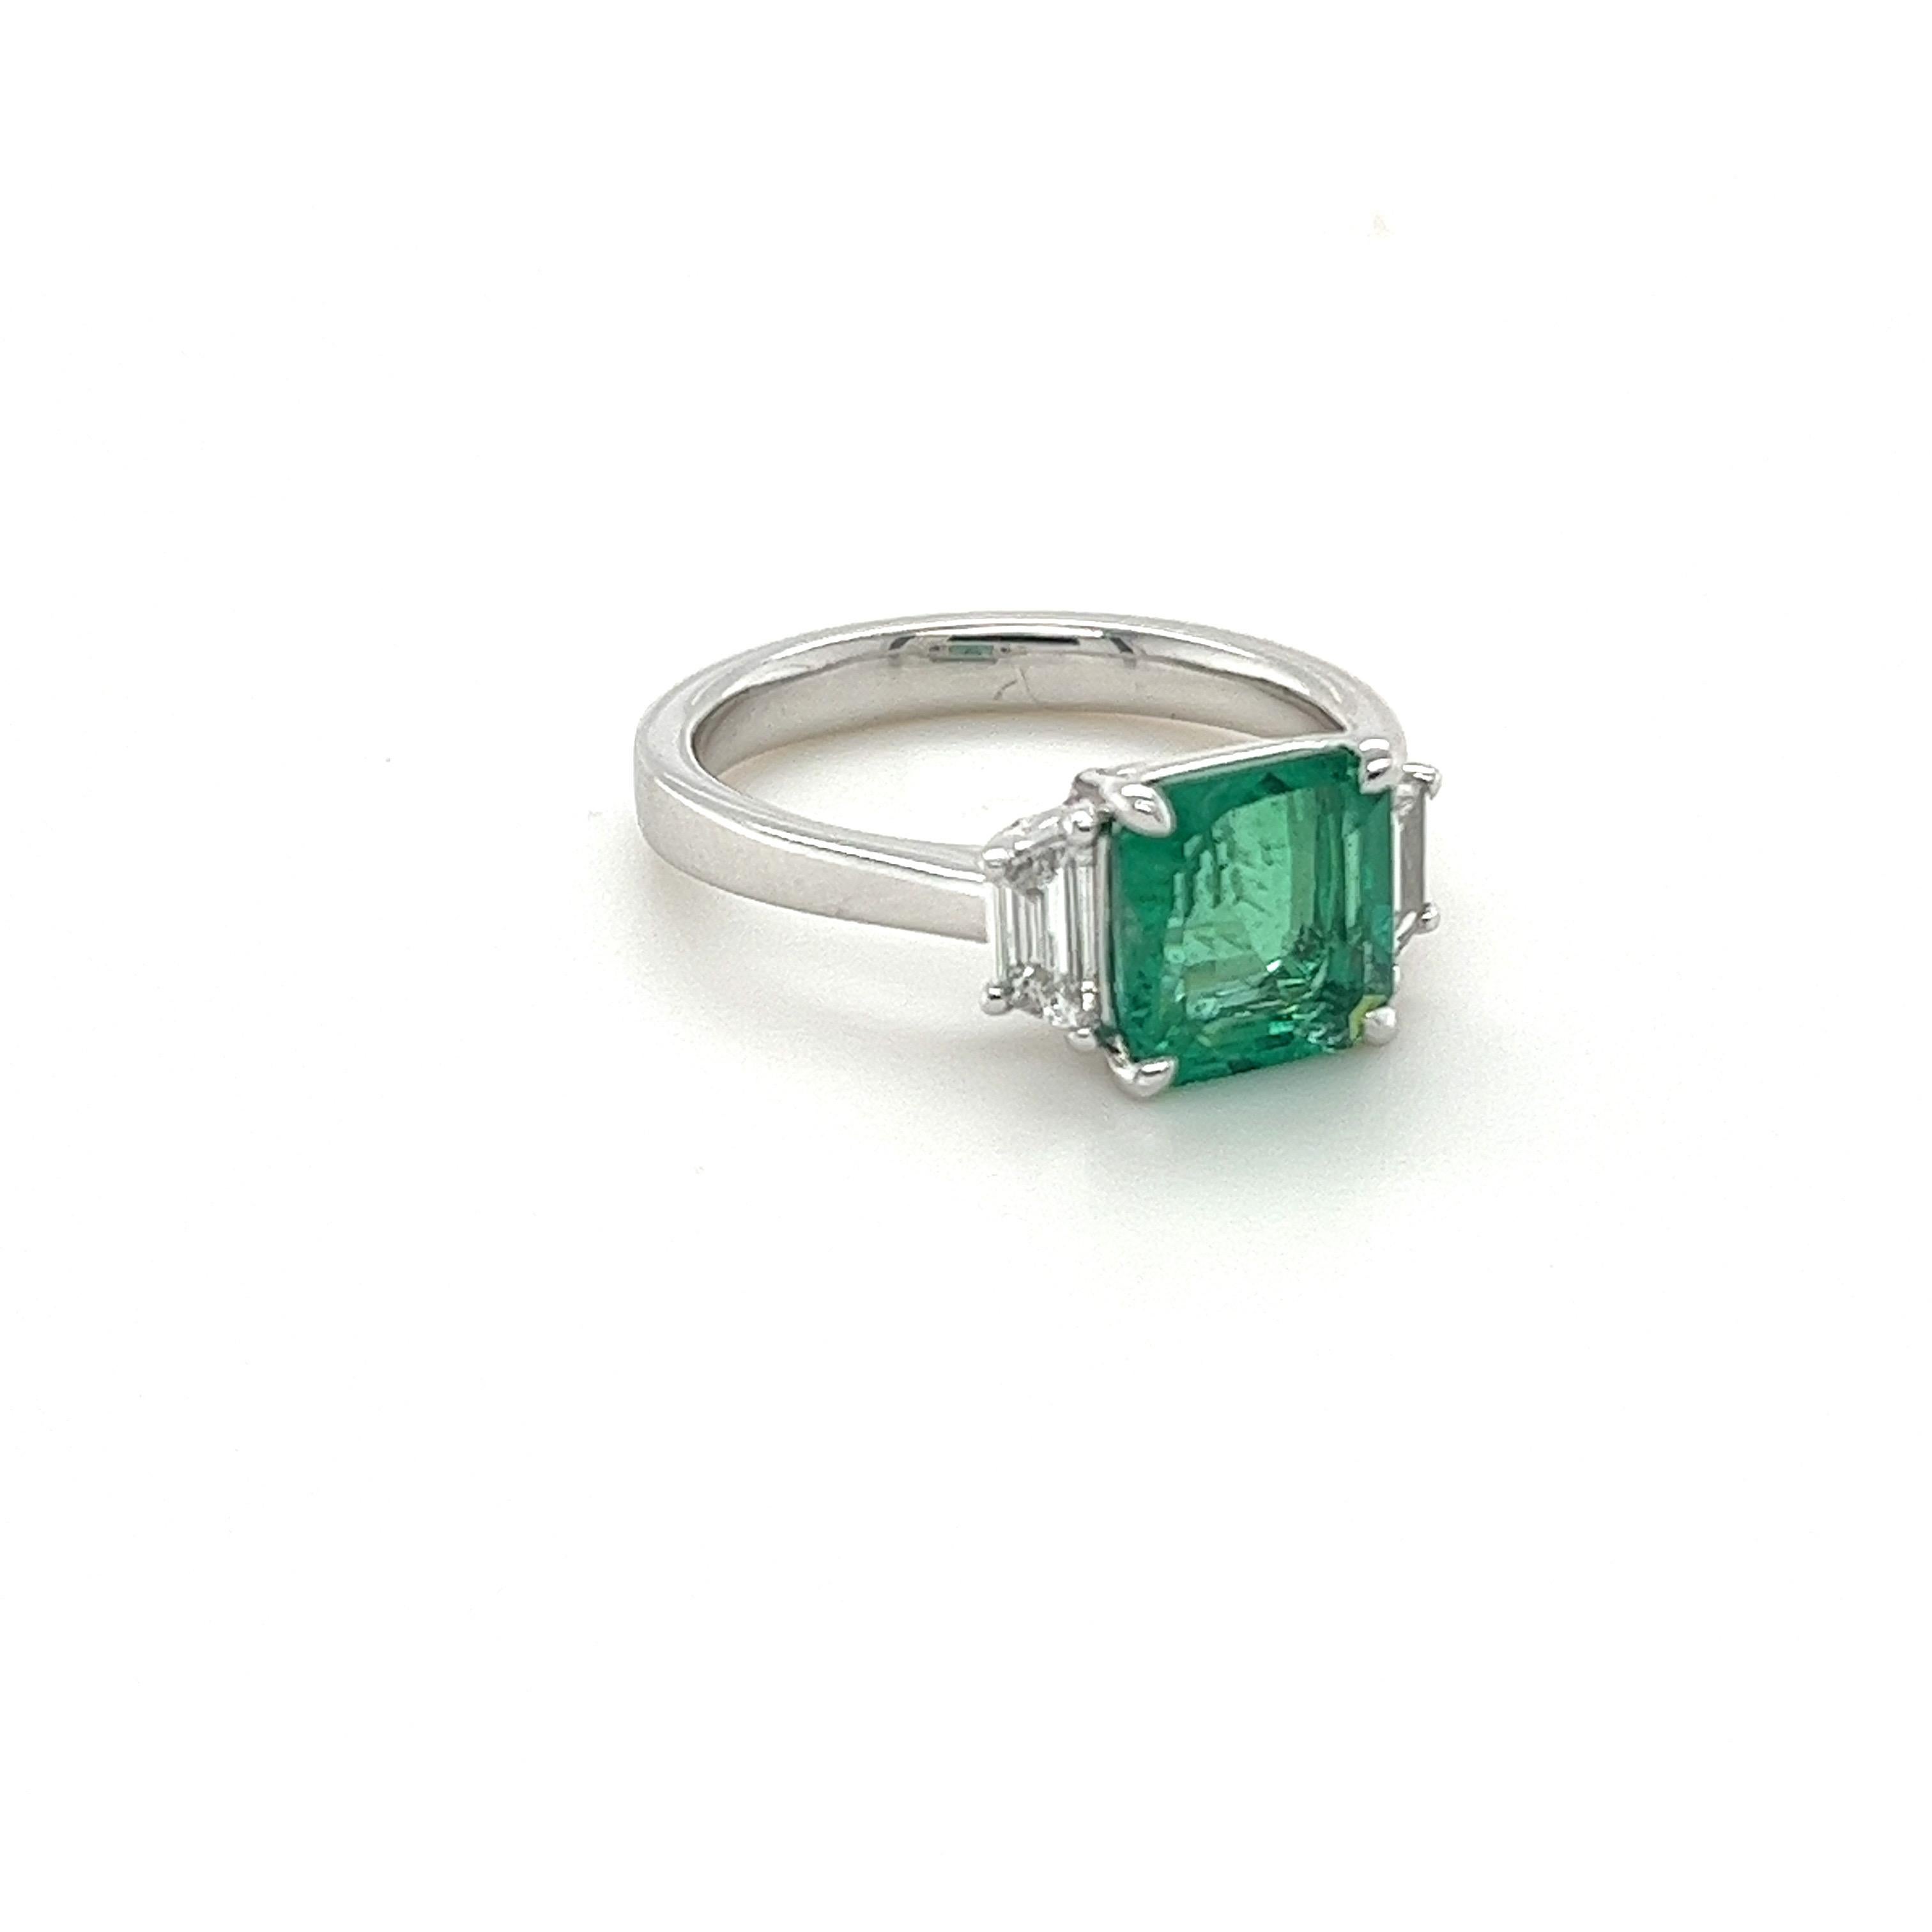 GIA Certified Emerald Cut Emerald weighing 2.20 carats
Measuring (8.12x7.64x4.88) mm
Diamonds weighing .35 carats
G-VS2
Set in Platinum
7.27 g